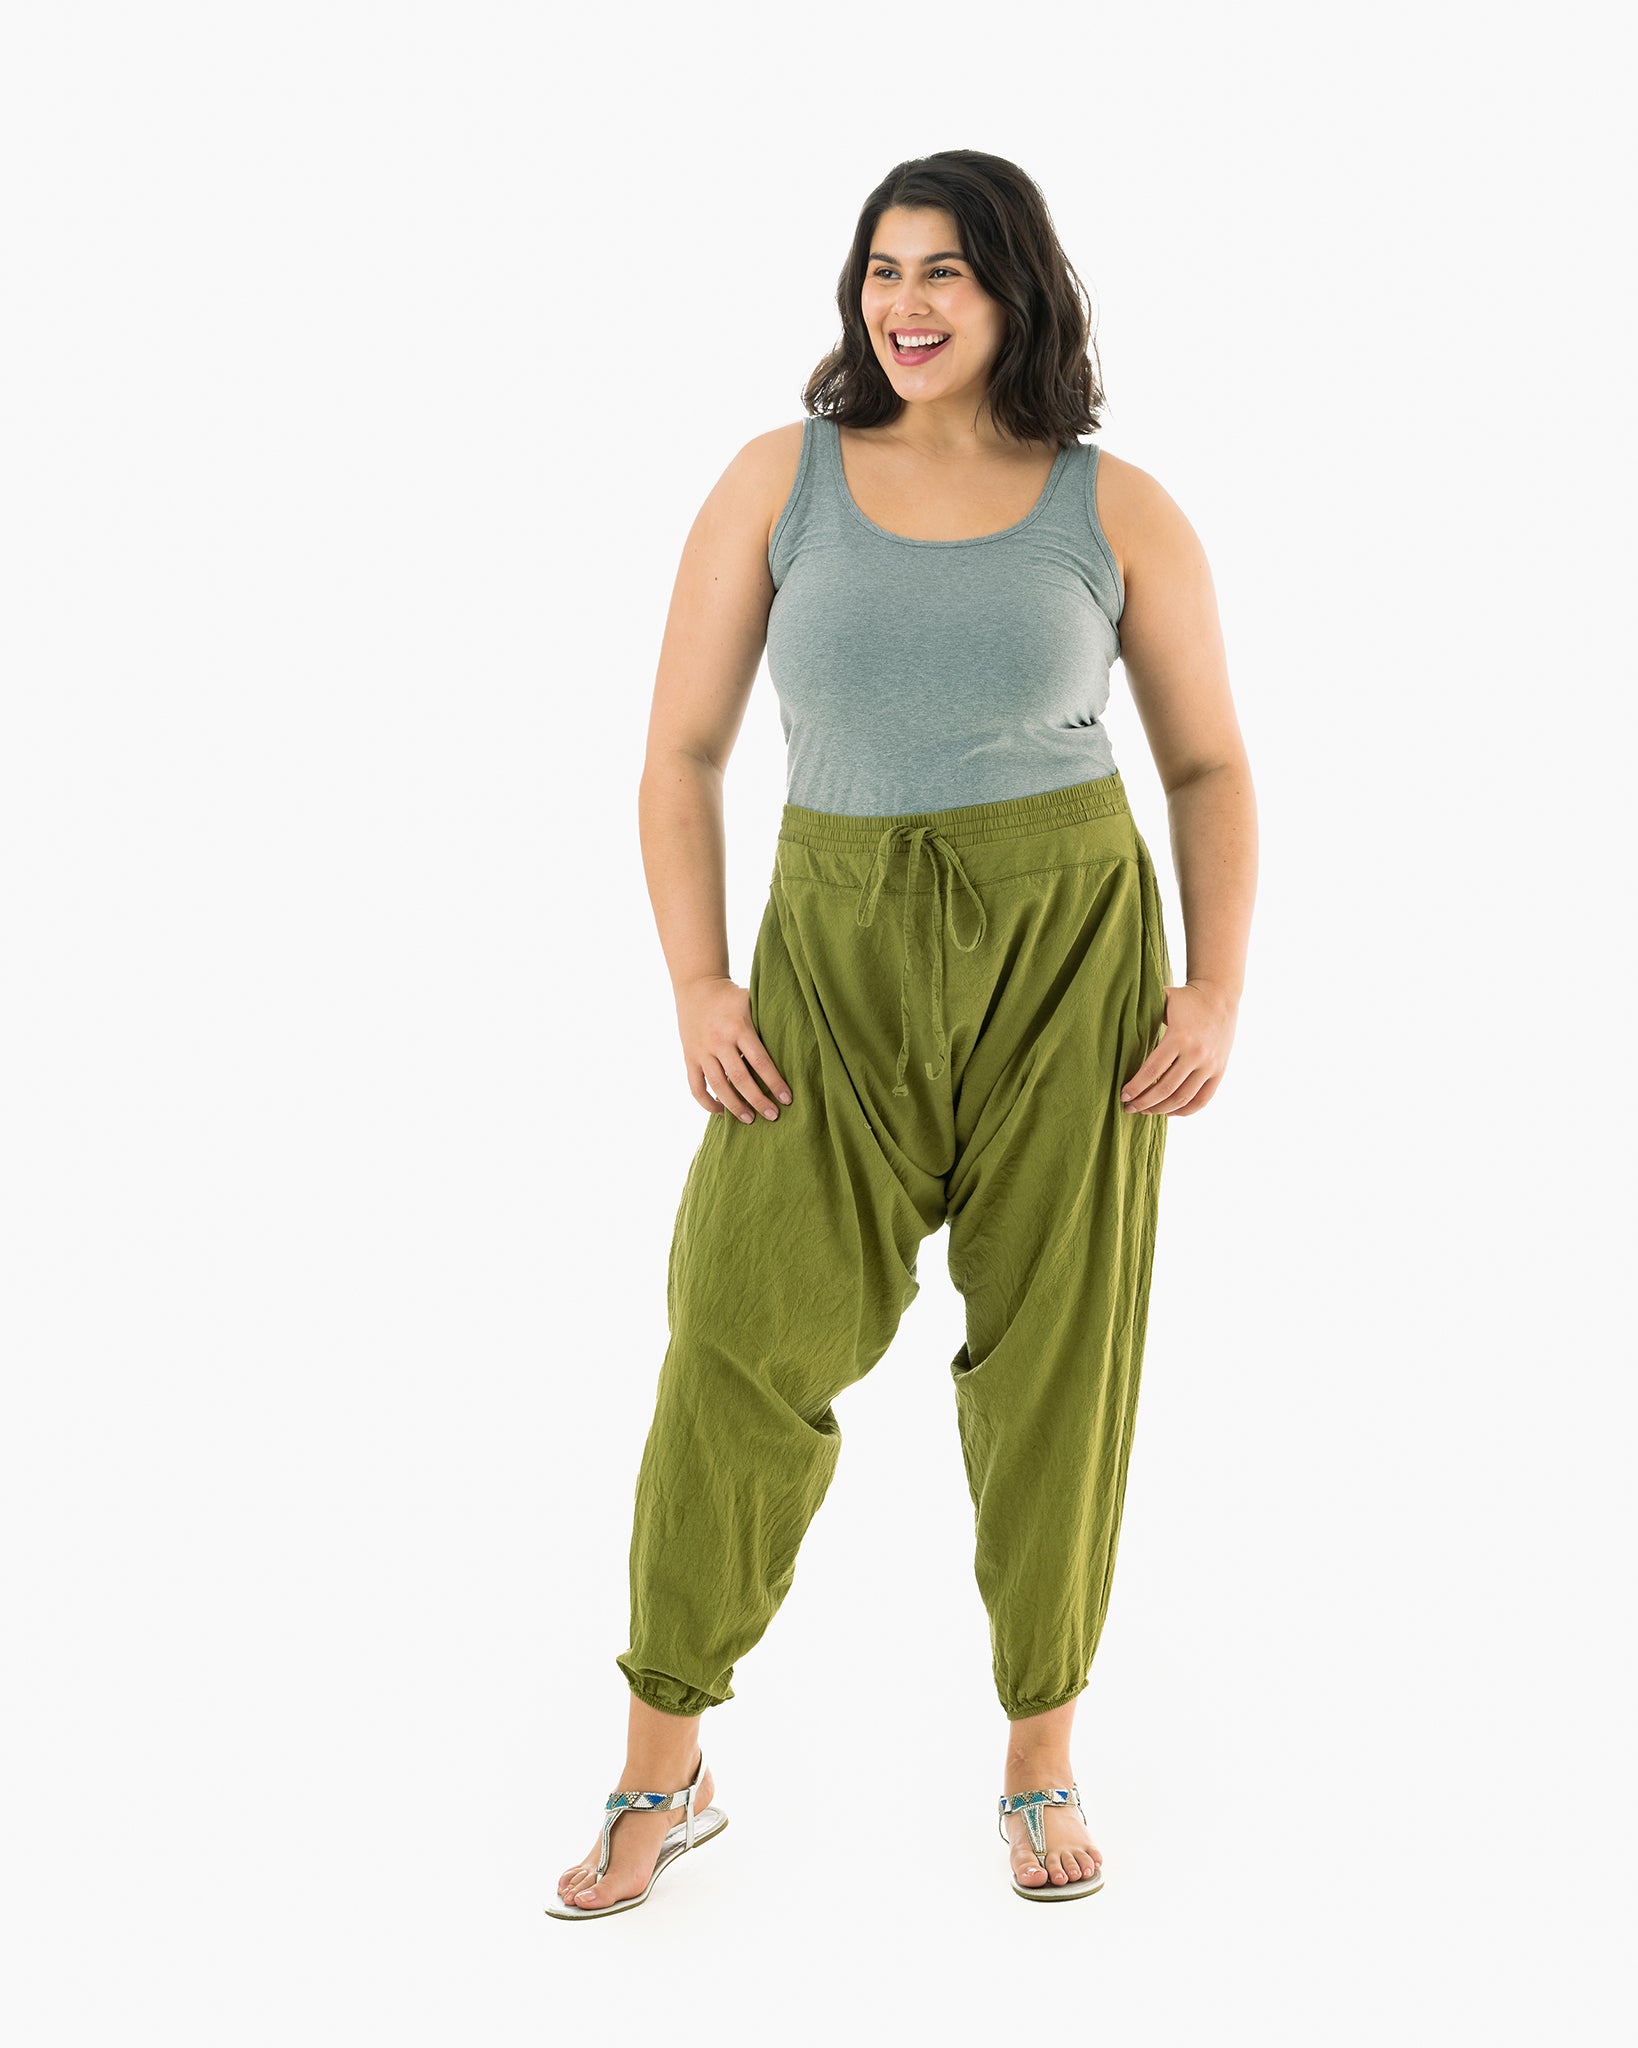 Organic yoga pants | Crotch - Pants Pants Low Yoga & Buddha Meditation